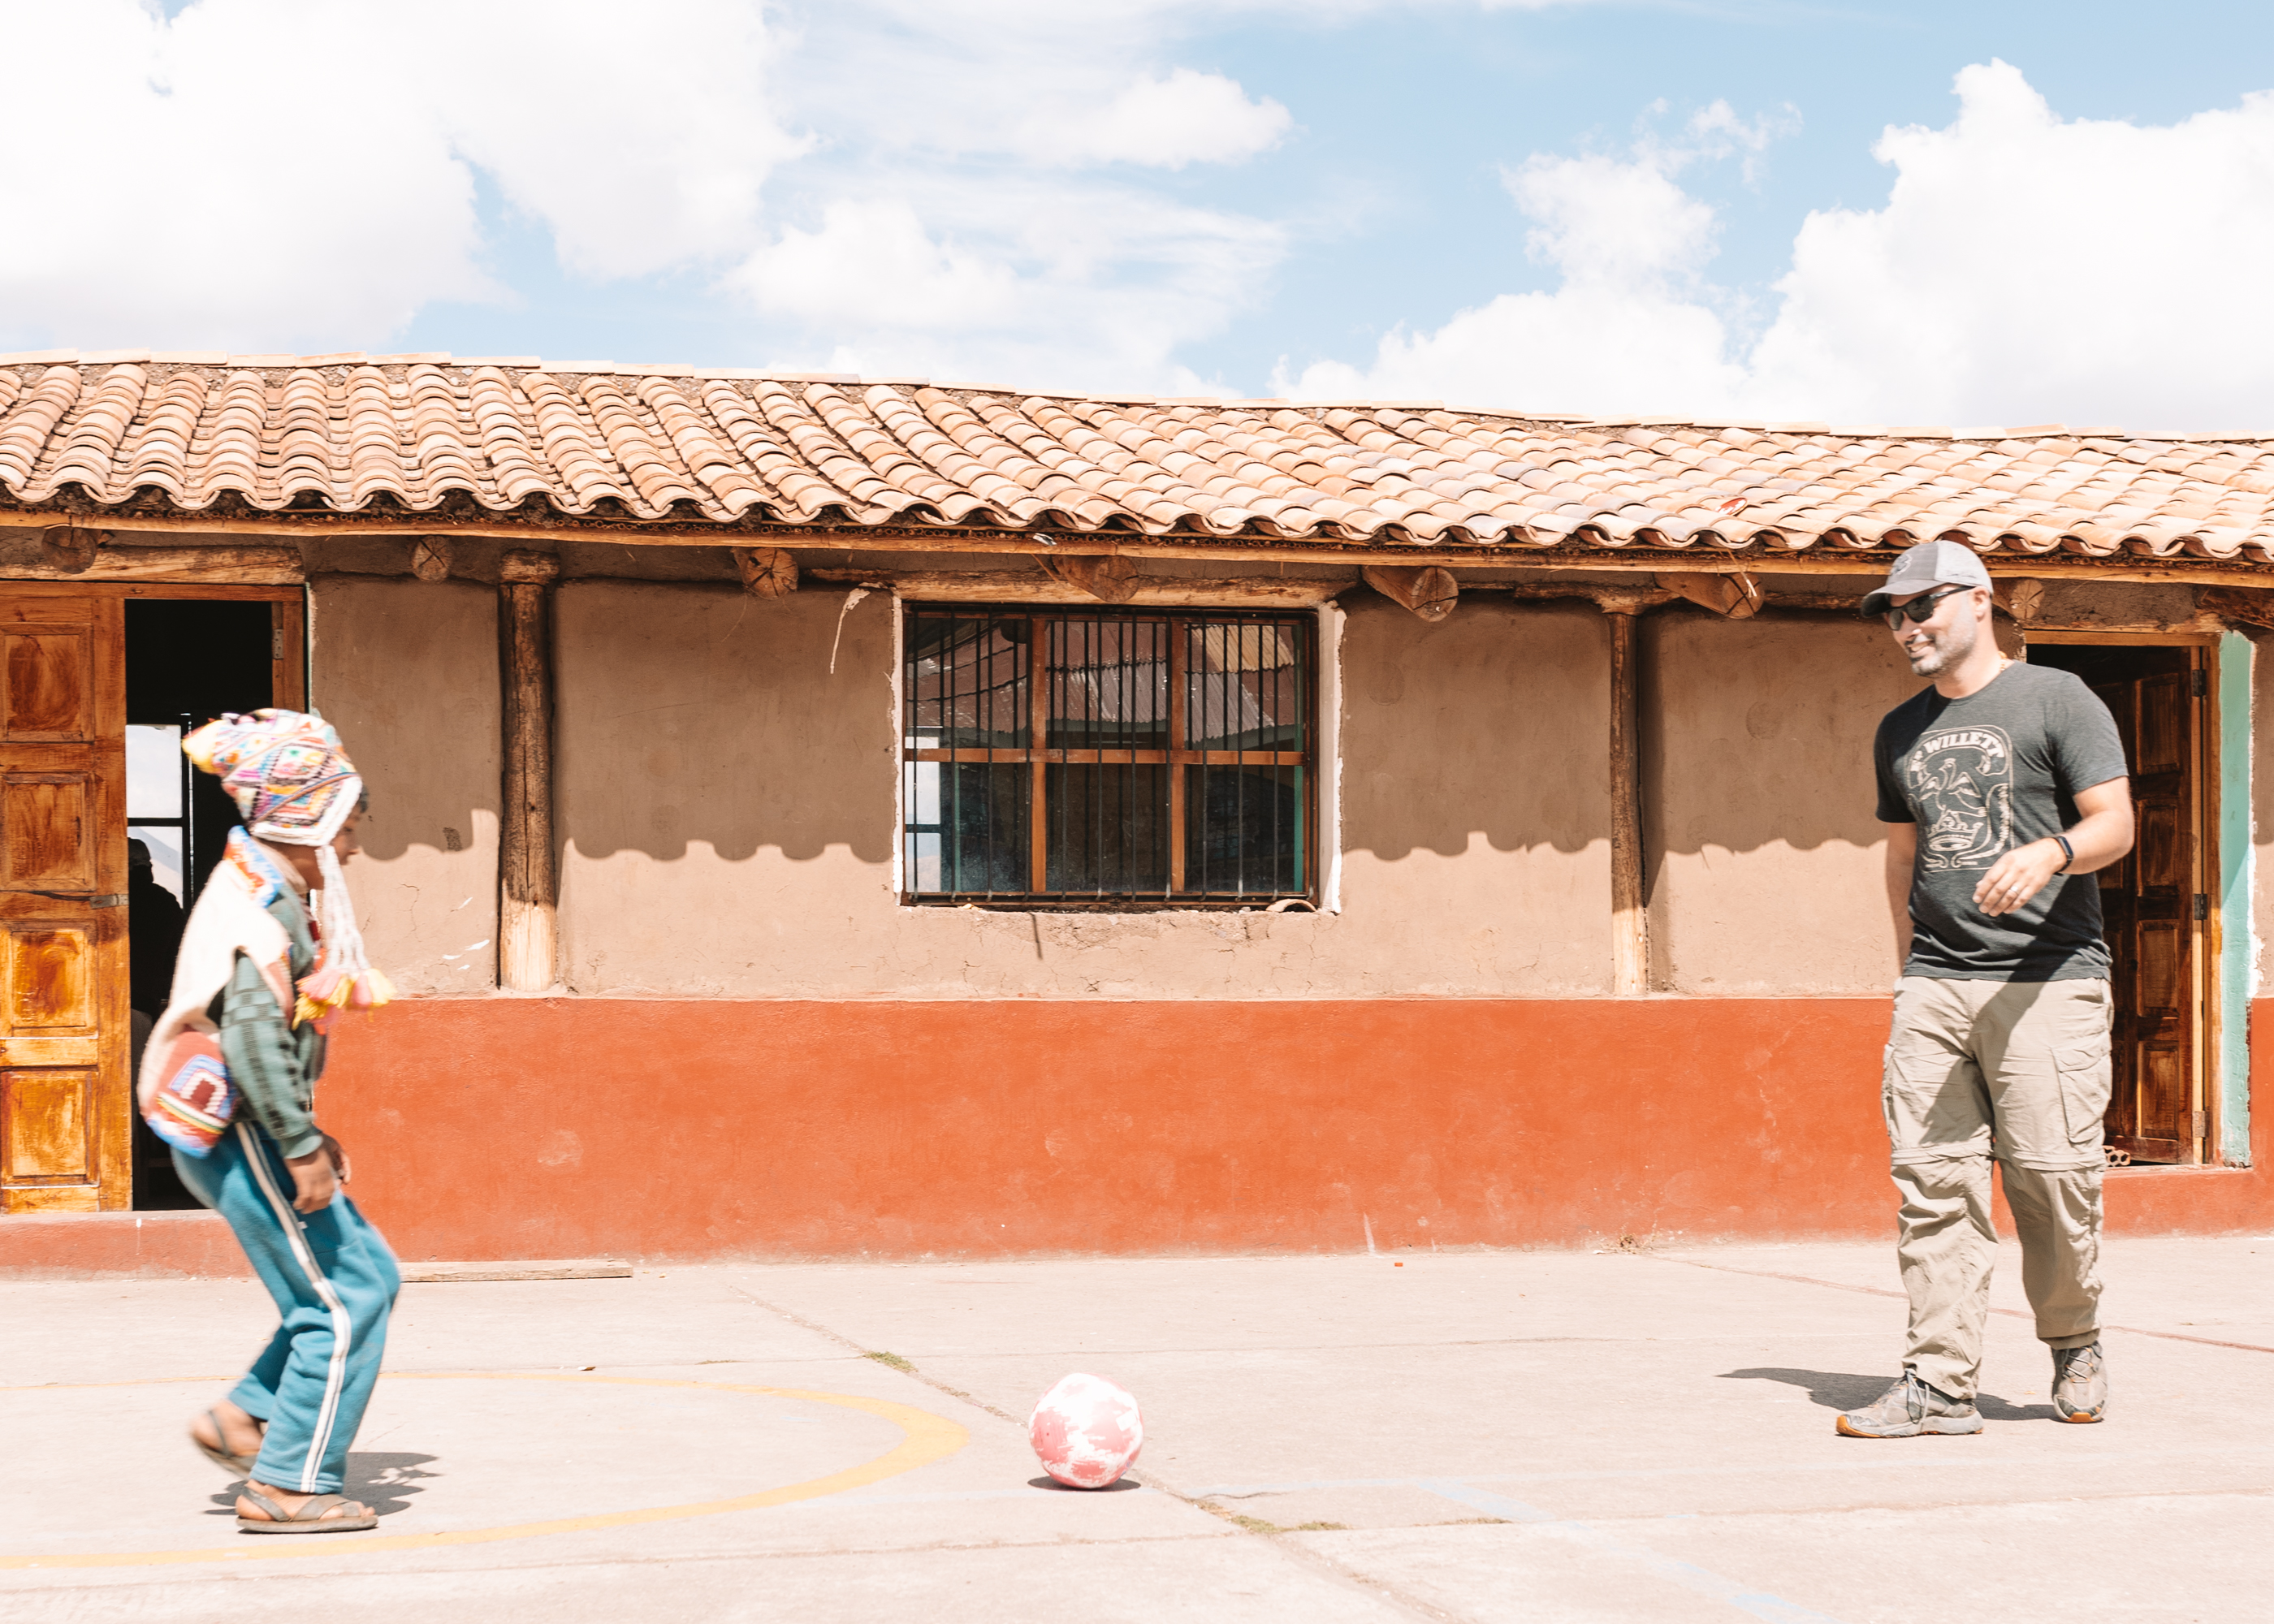 playing futbol with the school children in Peru